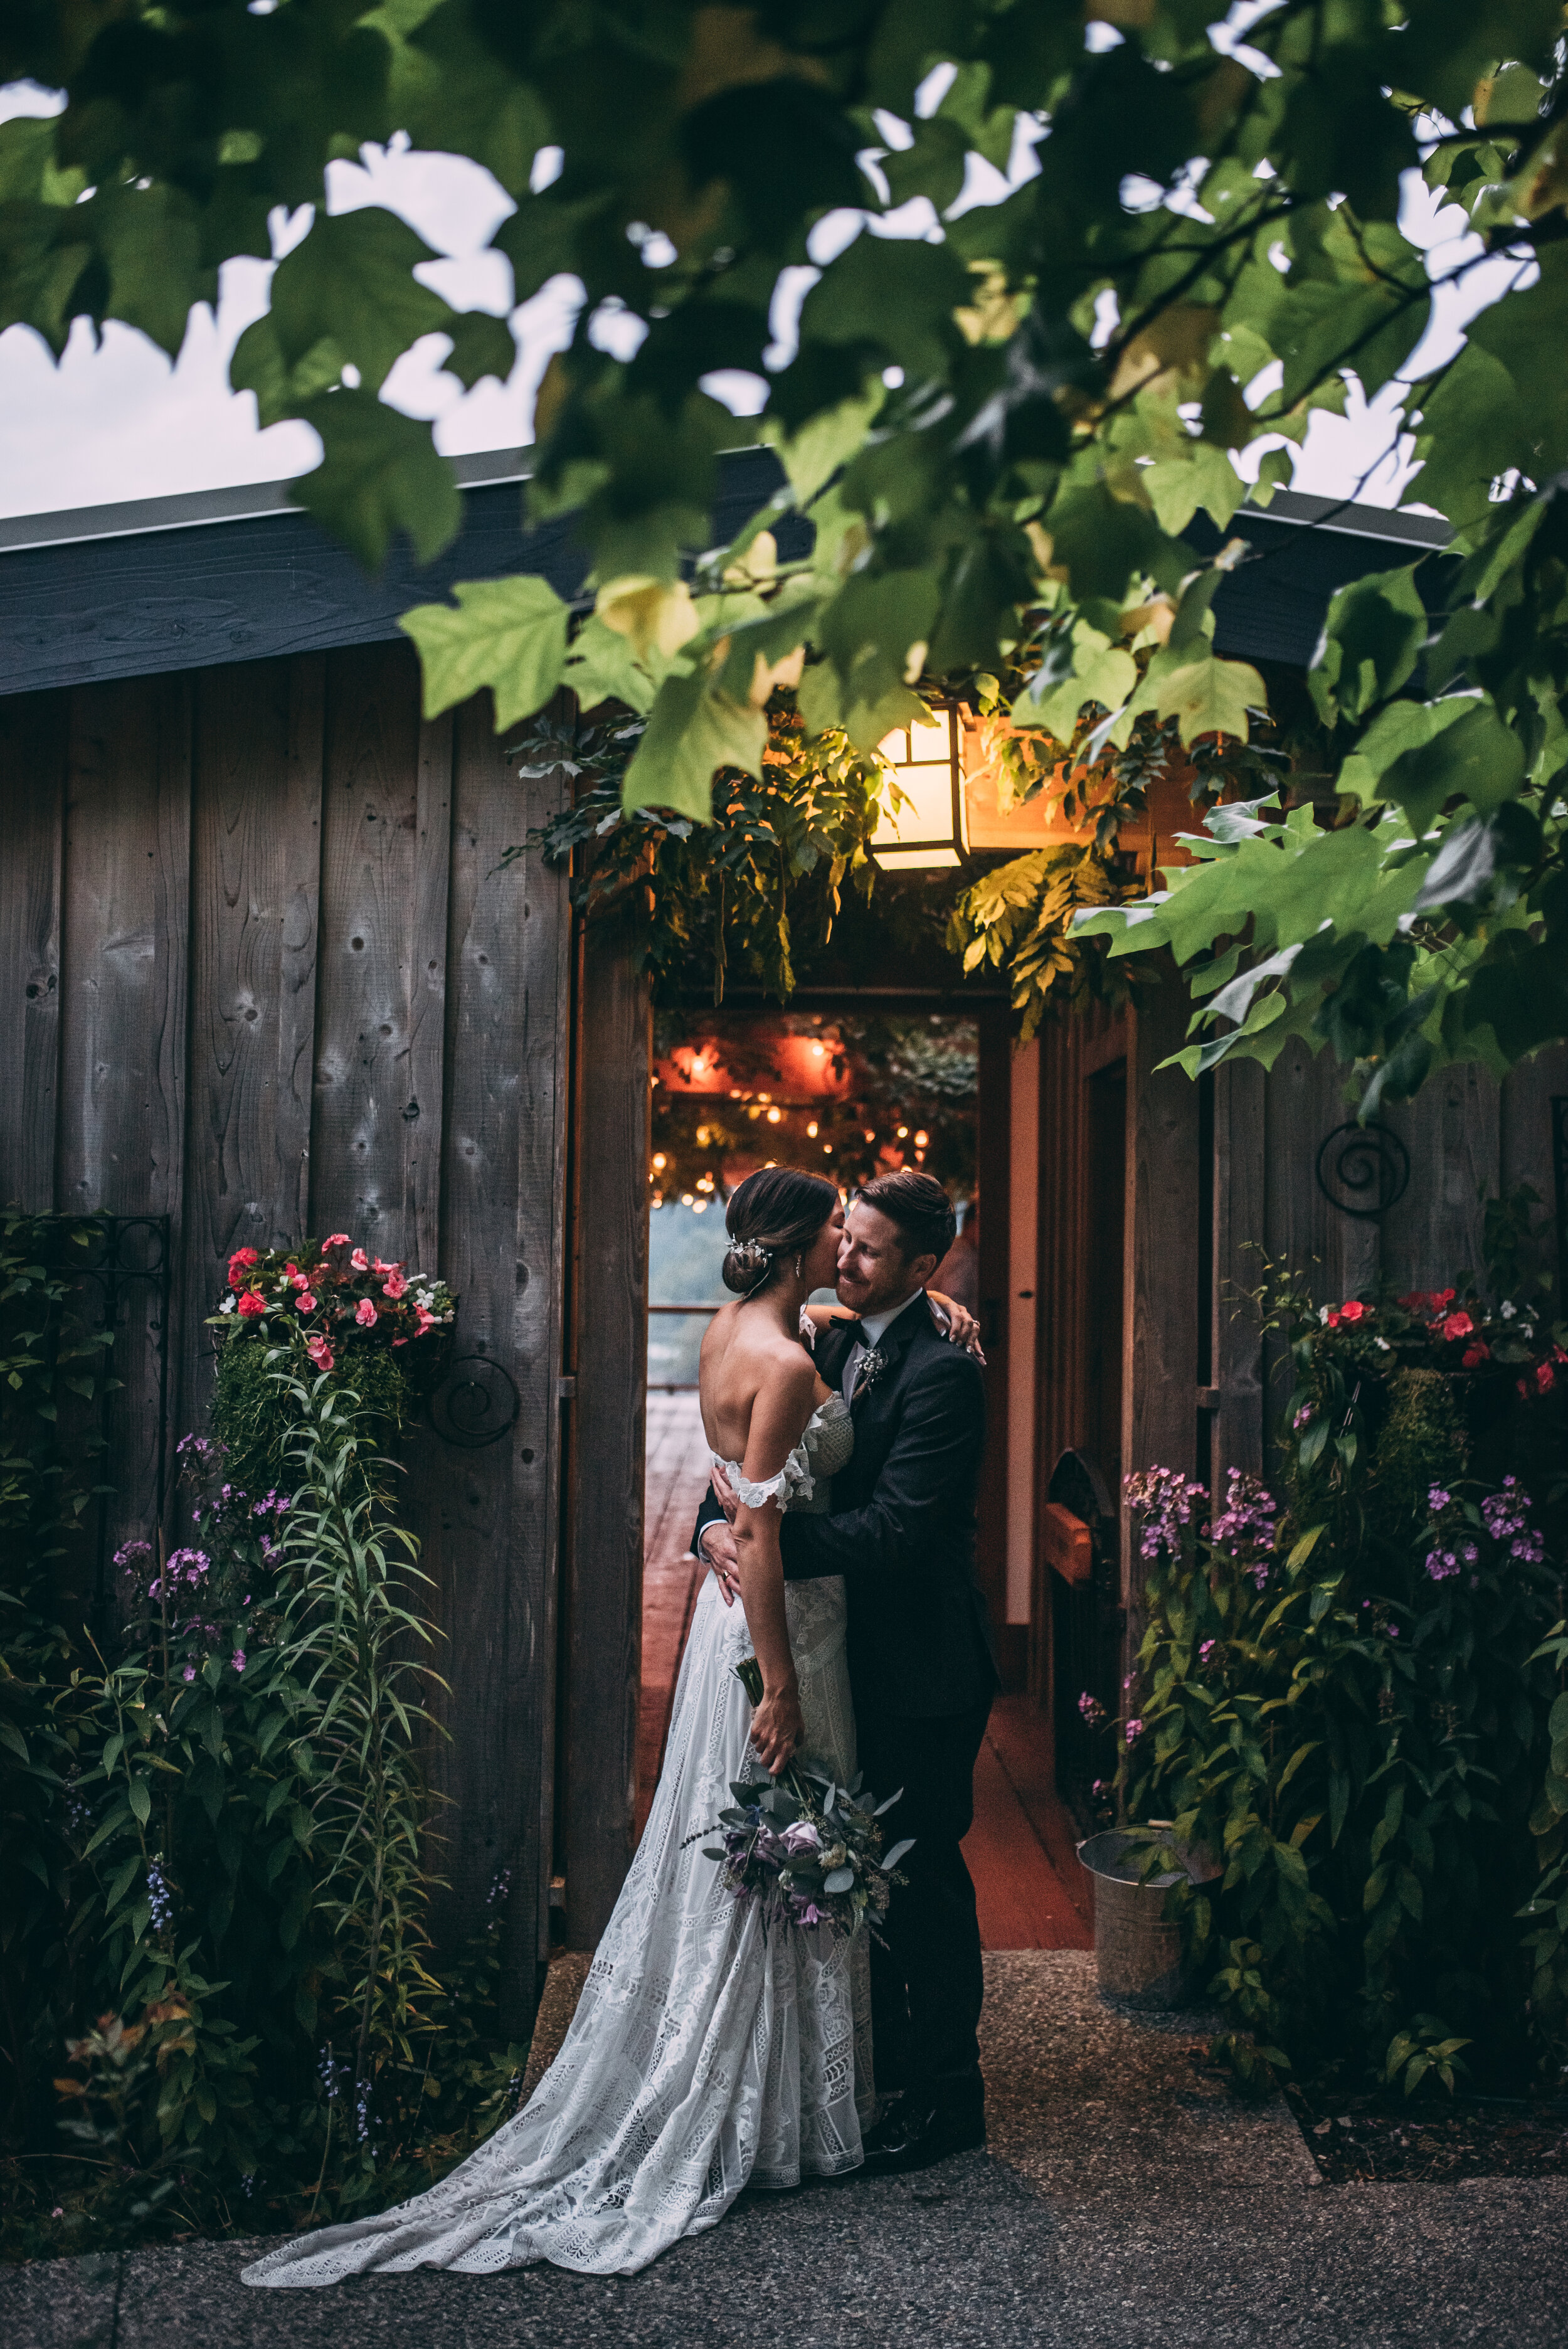 Westcoast Wilderness Lodge Wedding - Egmont, Sunshine Coast BC - Sea to Sky Wedding Photographer - Laura Olson Photography -  August 24, 2019.jpg